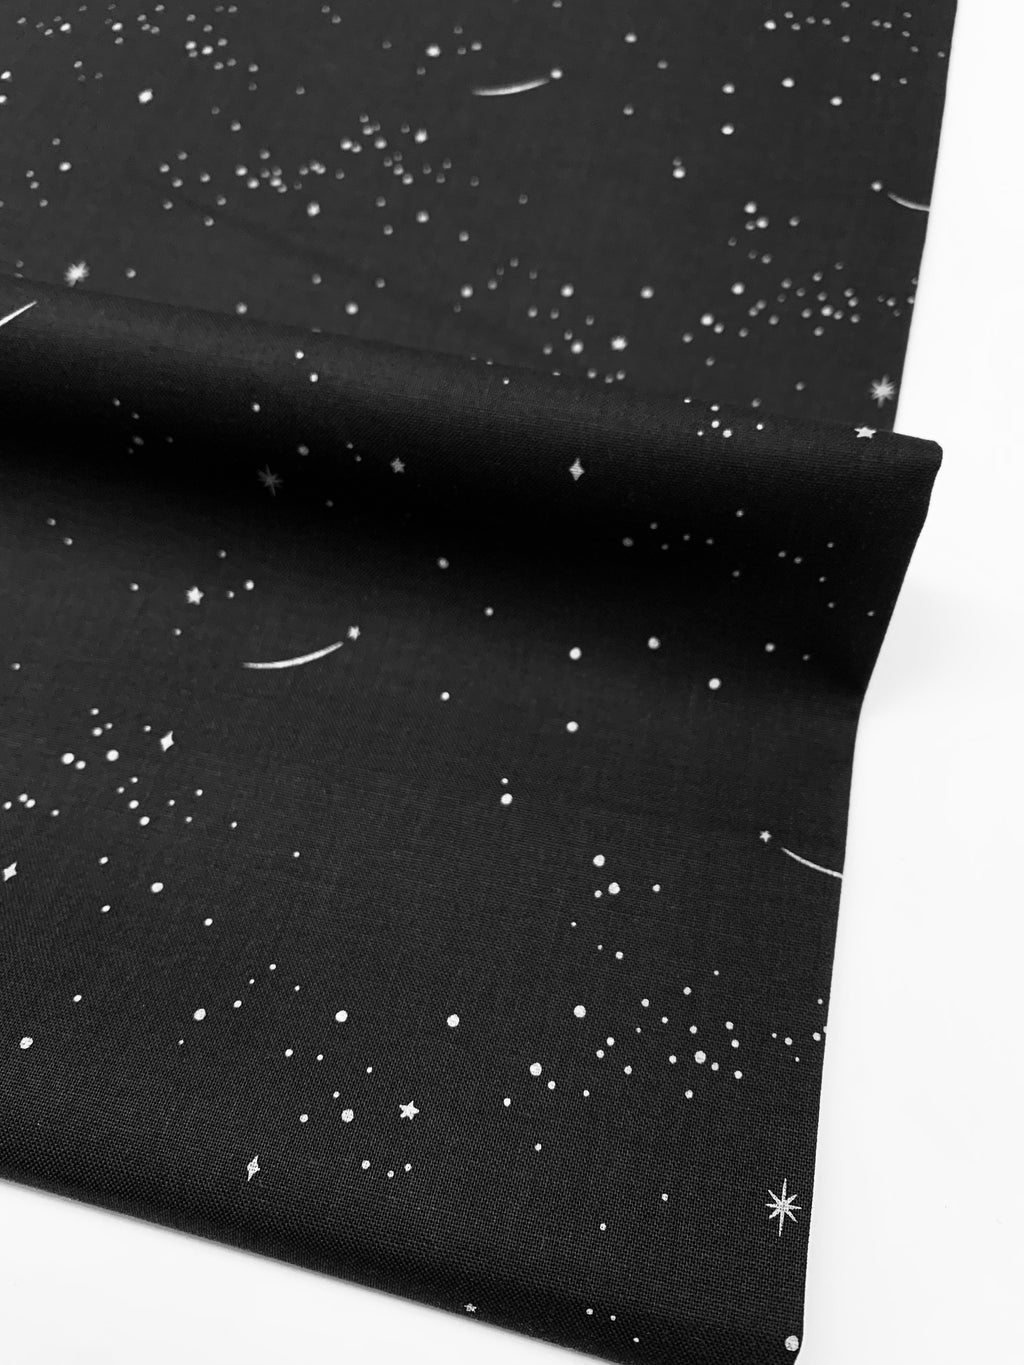 Figo Fabrics Lucky Charms/ Shooting Stars in Black